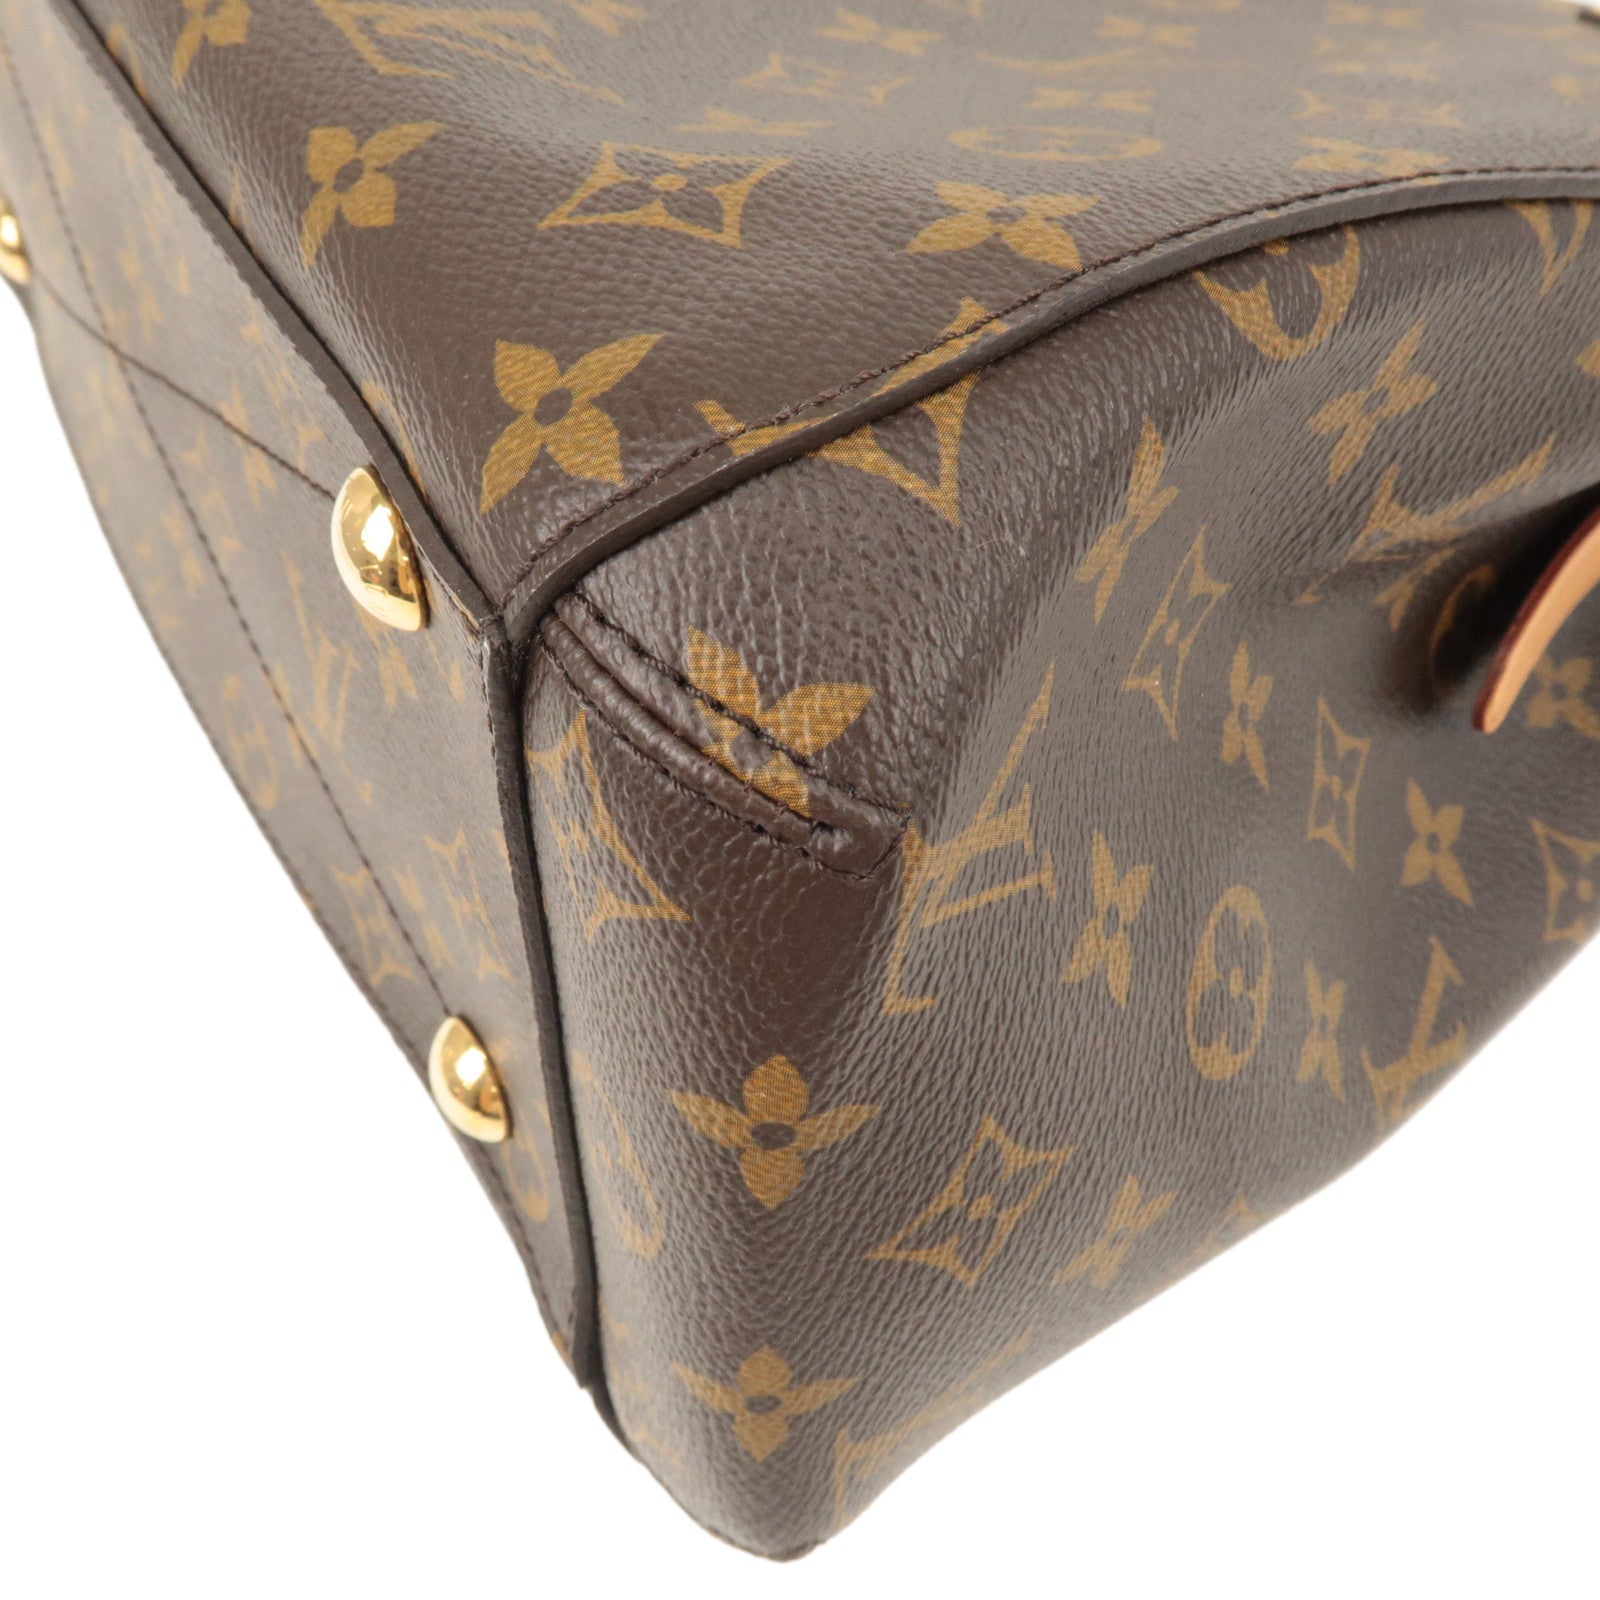 Louis-Vuitton-Monogram-Montaigne-MM-2Way-Bag-Hand-Bag-M41056